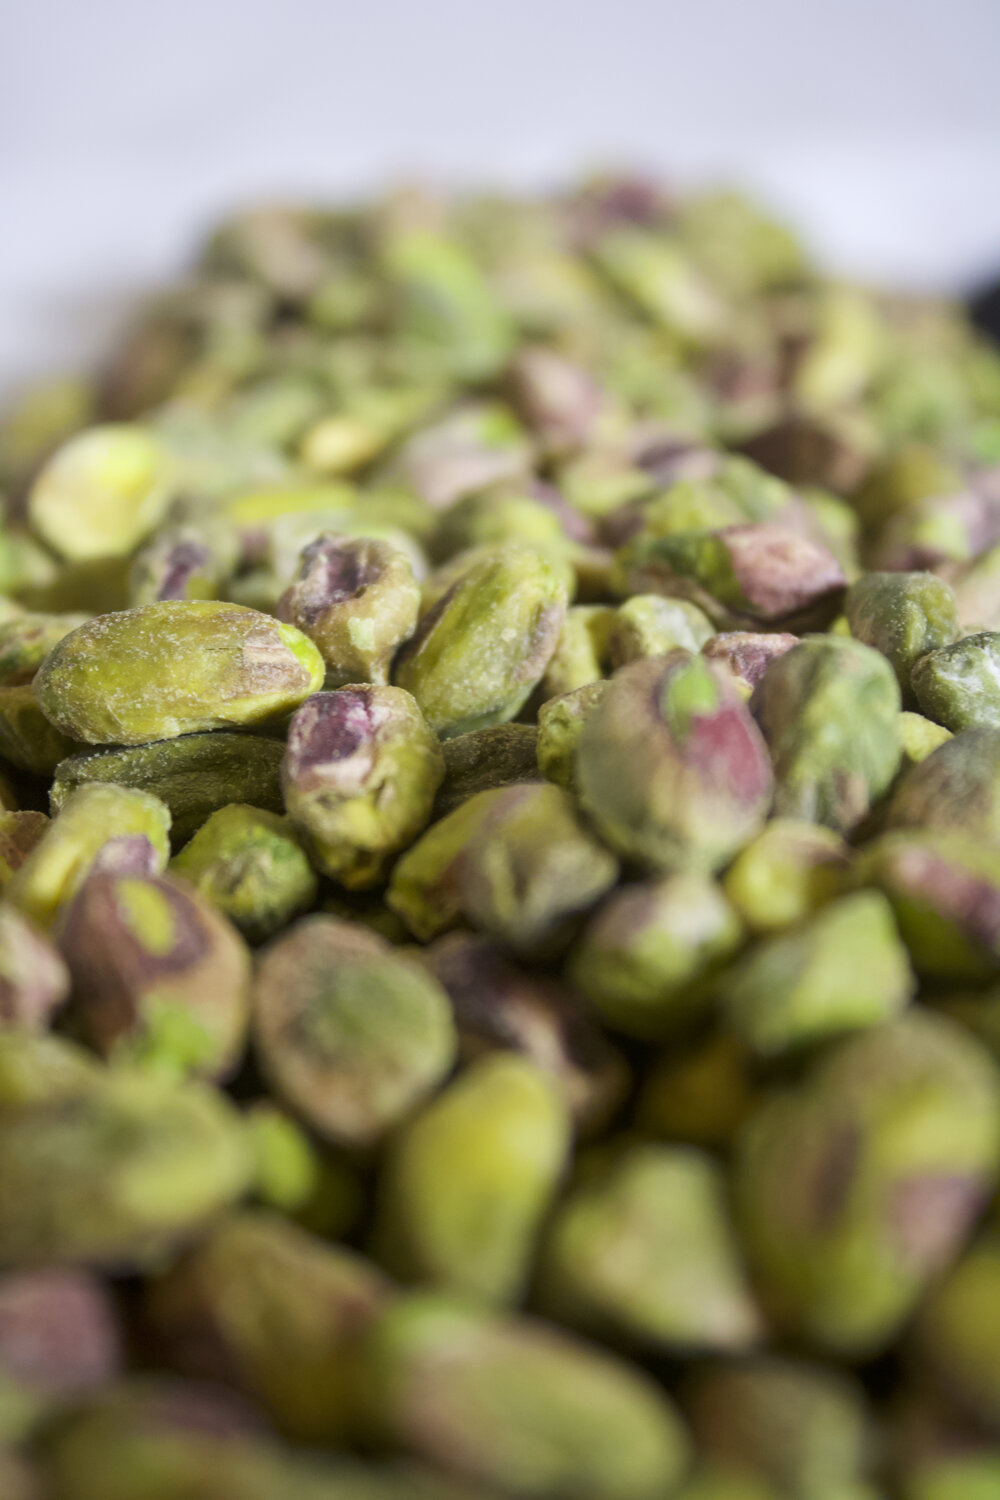 Export of green Akbari pistachio kernels